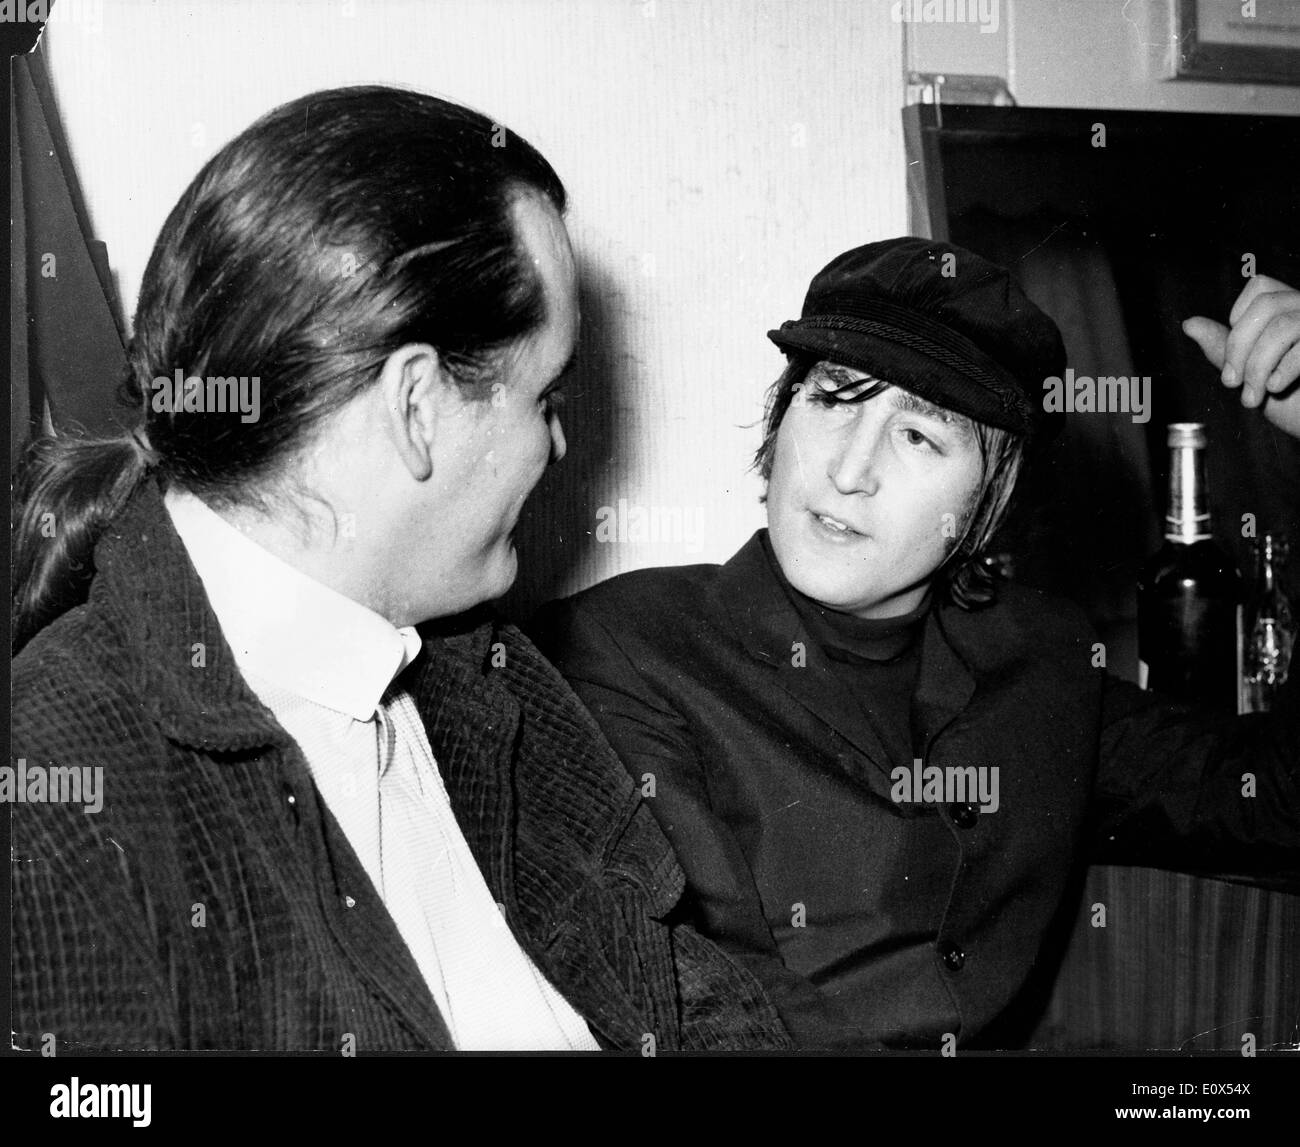 Beatles singer John Lennon visits with P.J. Proby Stock Photo